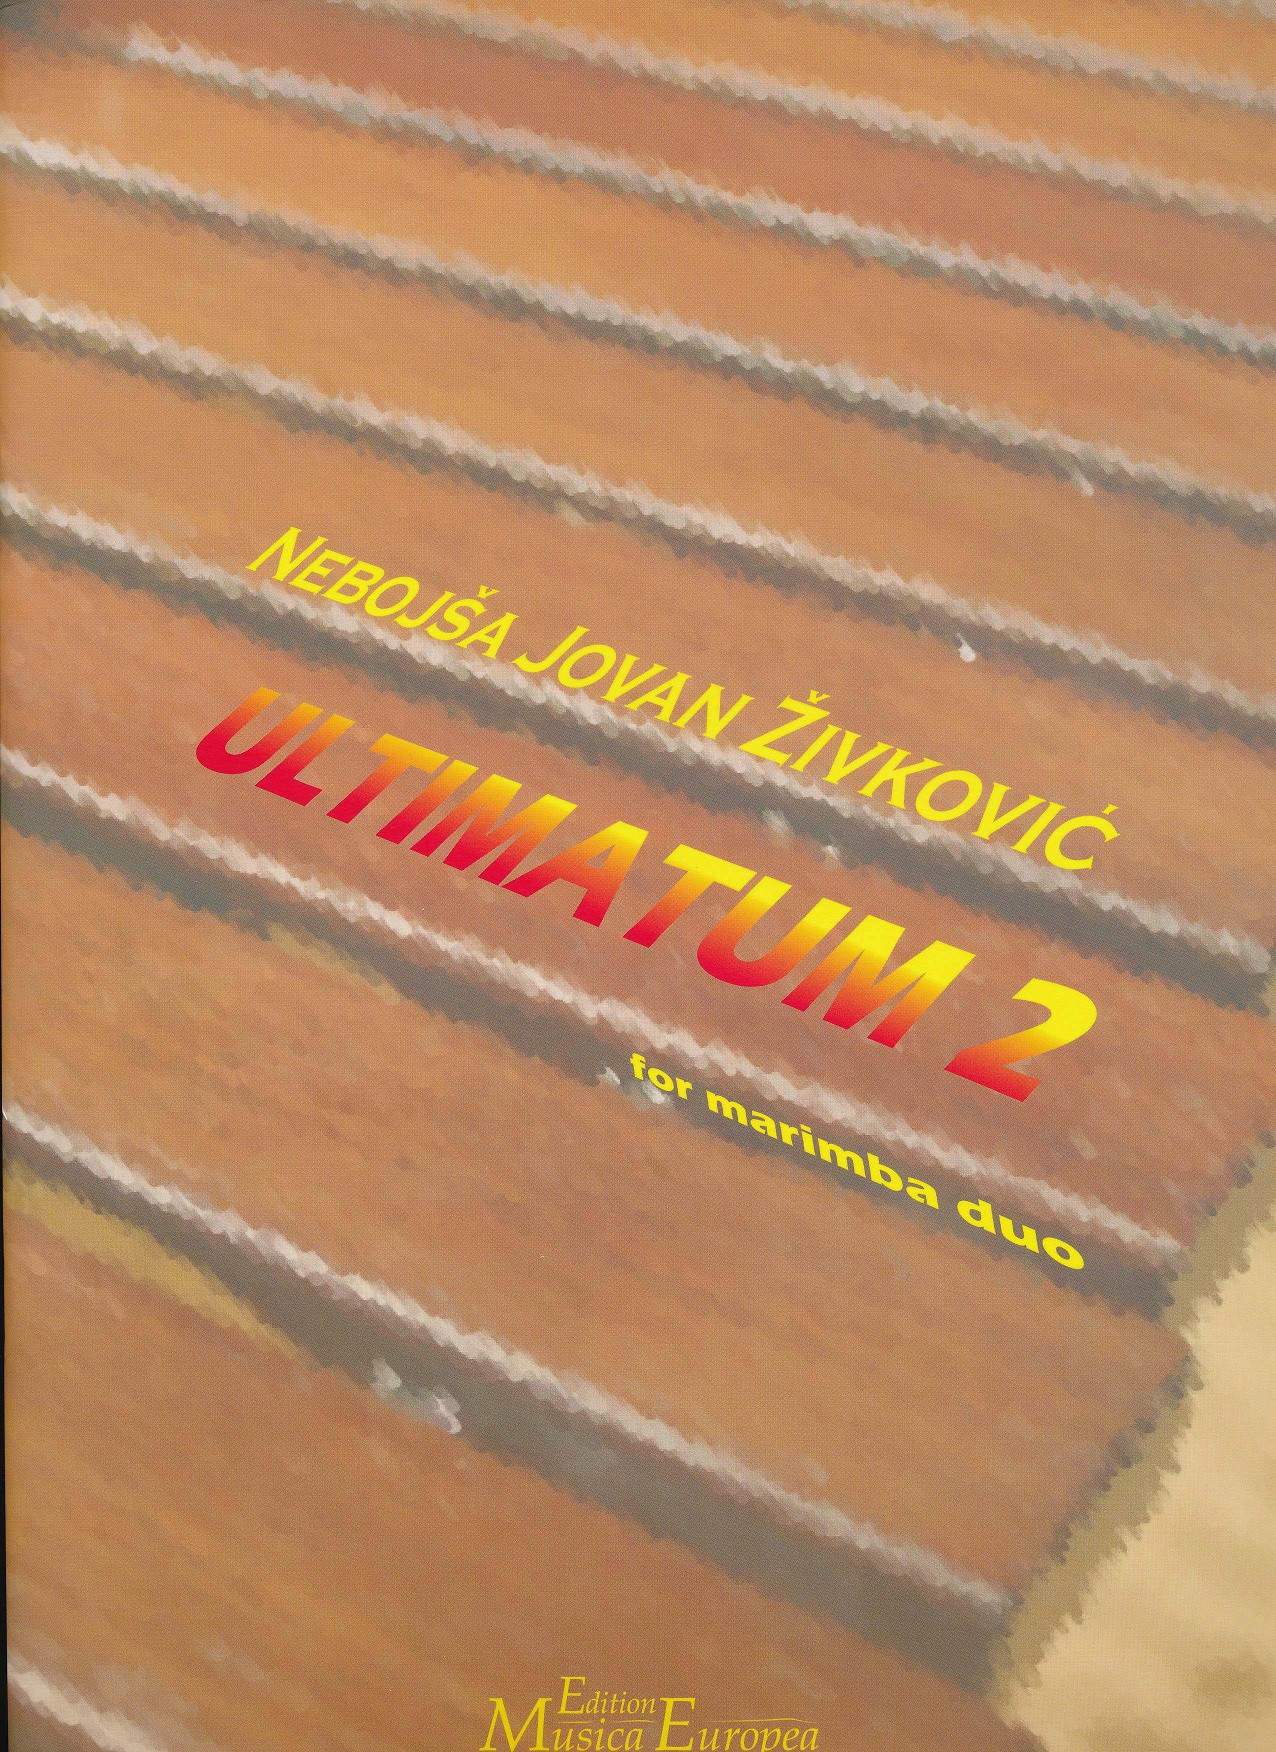 Ultimatum 2 by Nebojsa Zivkovic